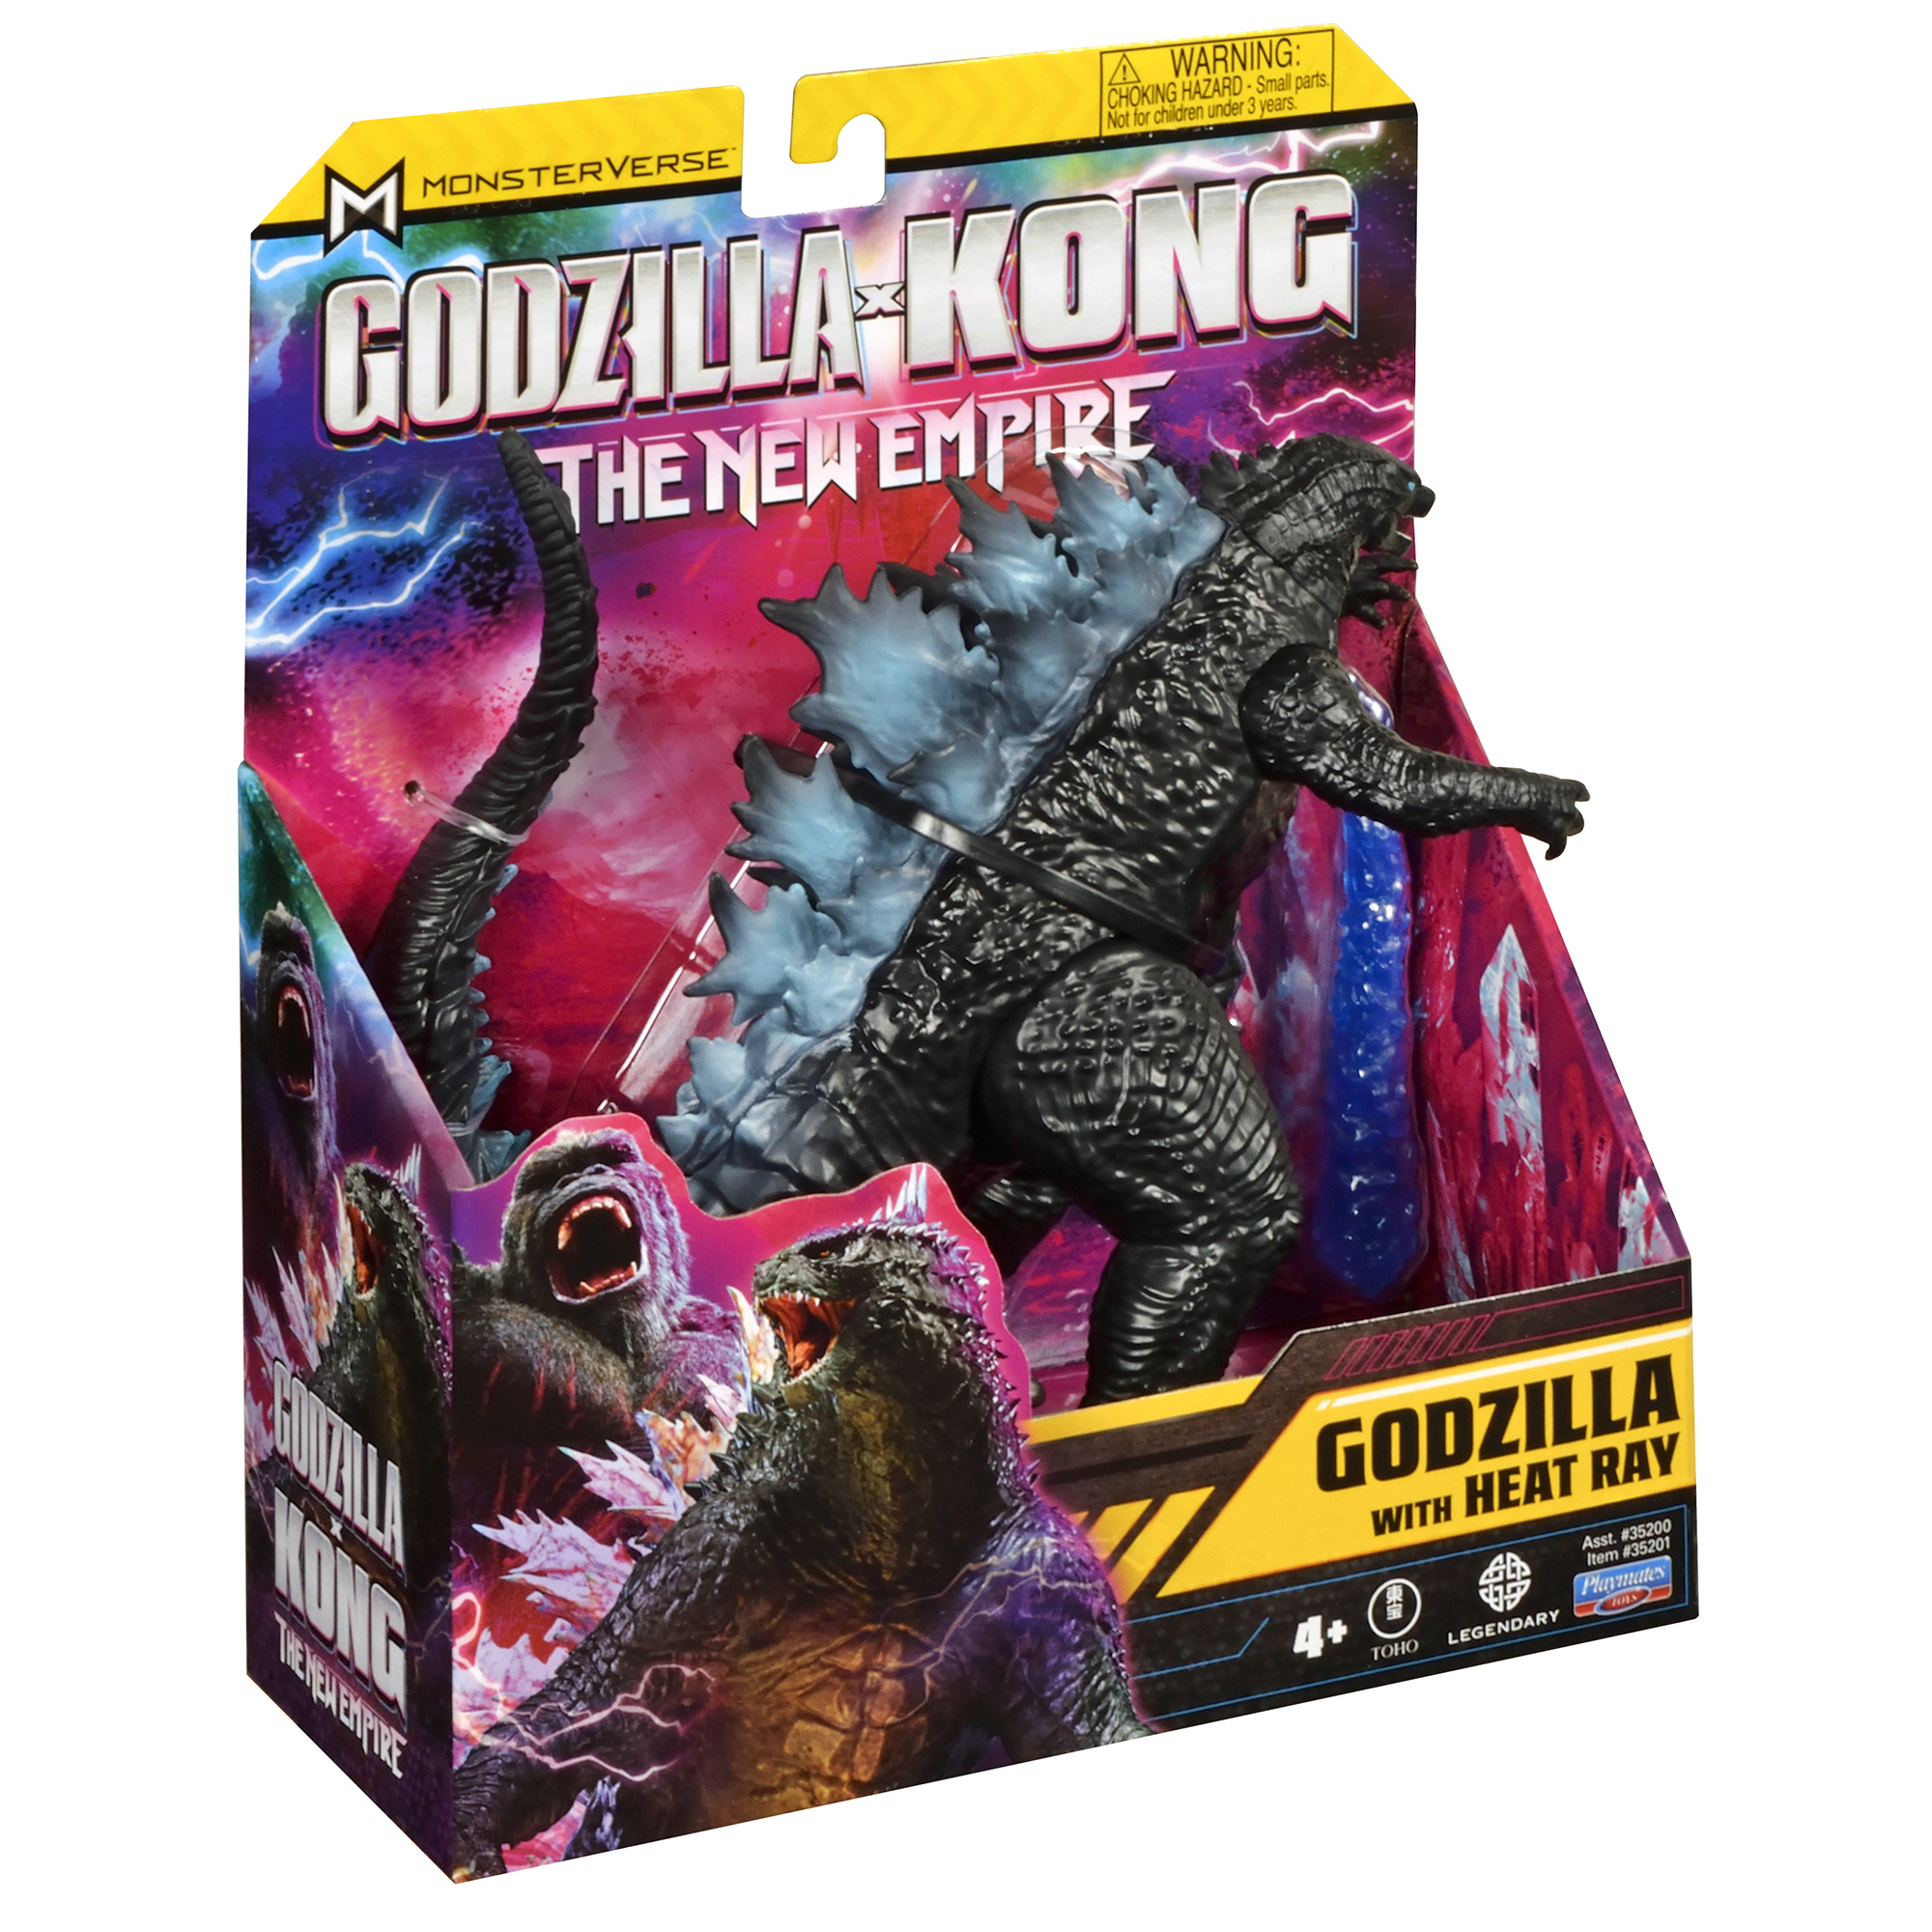 https://www.scifijapan.com/images/Godzilla/GodzillaxKong-Playmates34.jpg